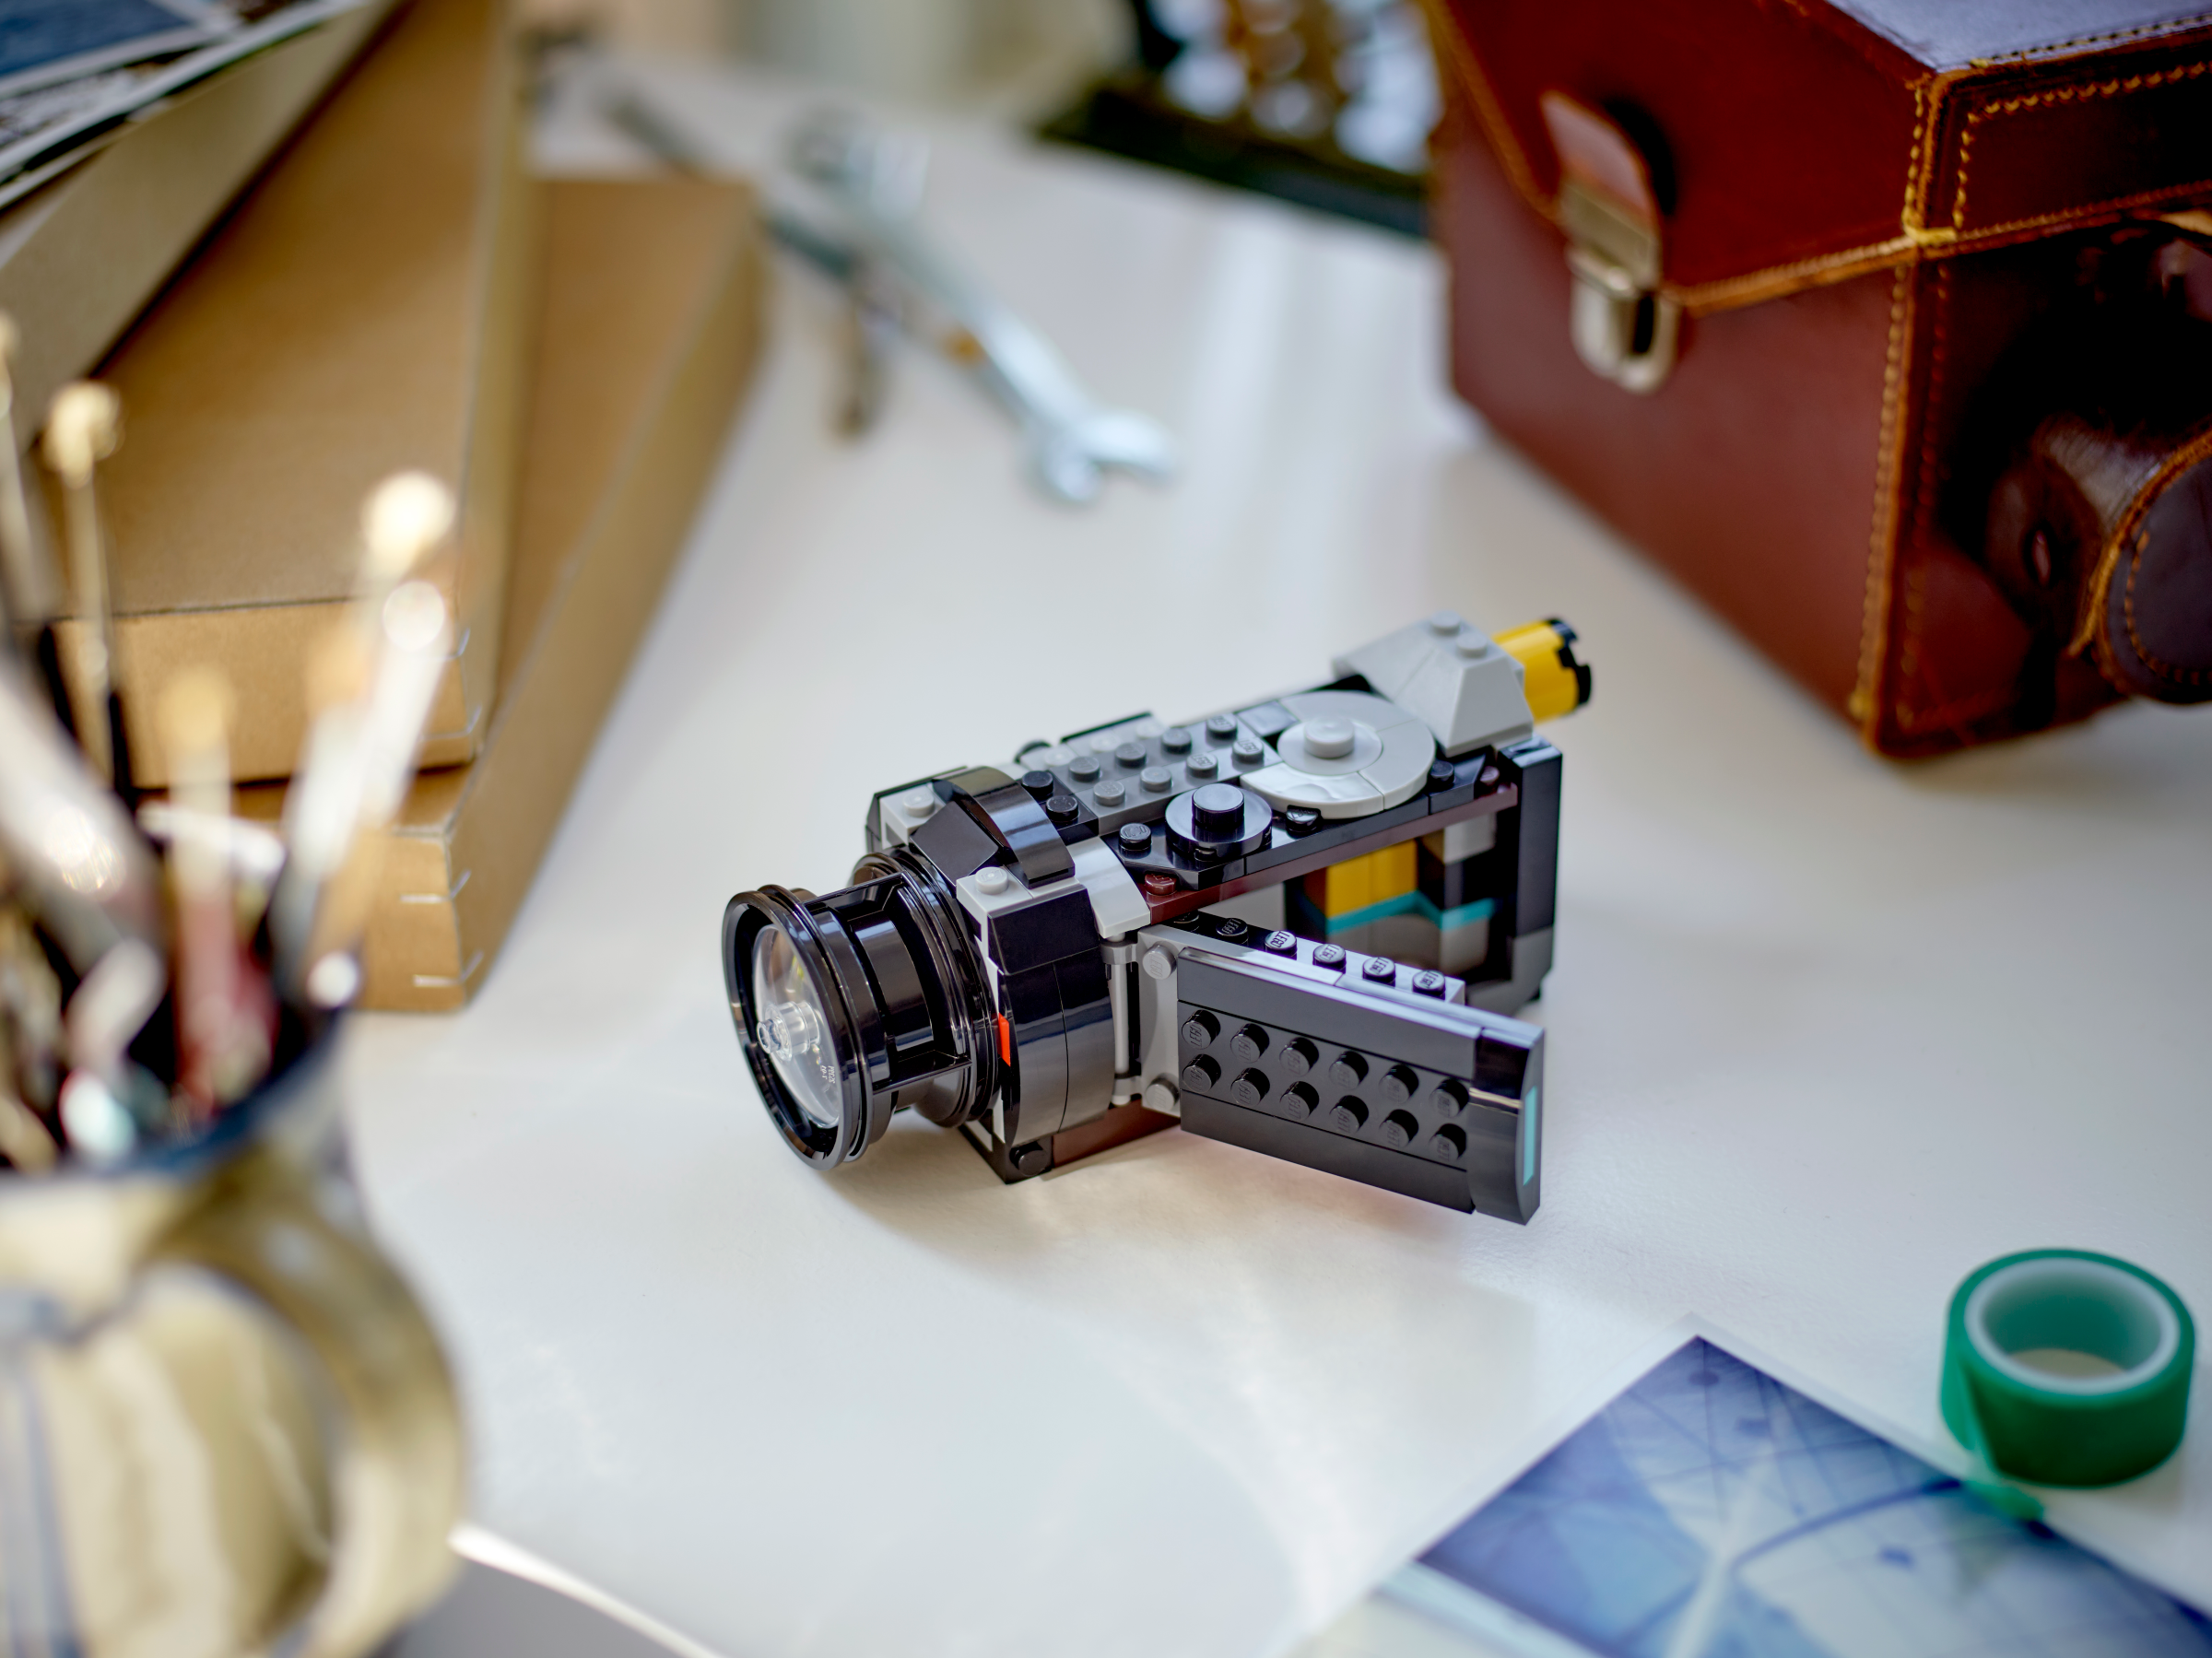 LEGO® Creator Cámara Retro 31147 - Abacus Online